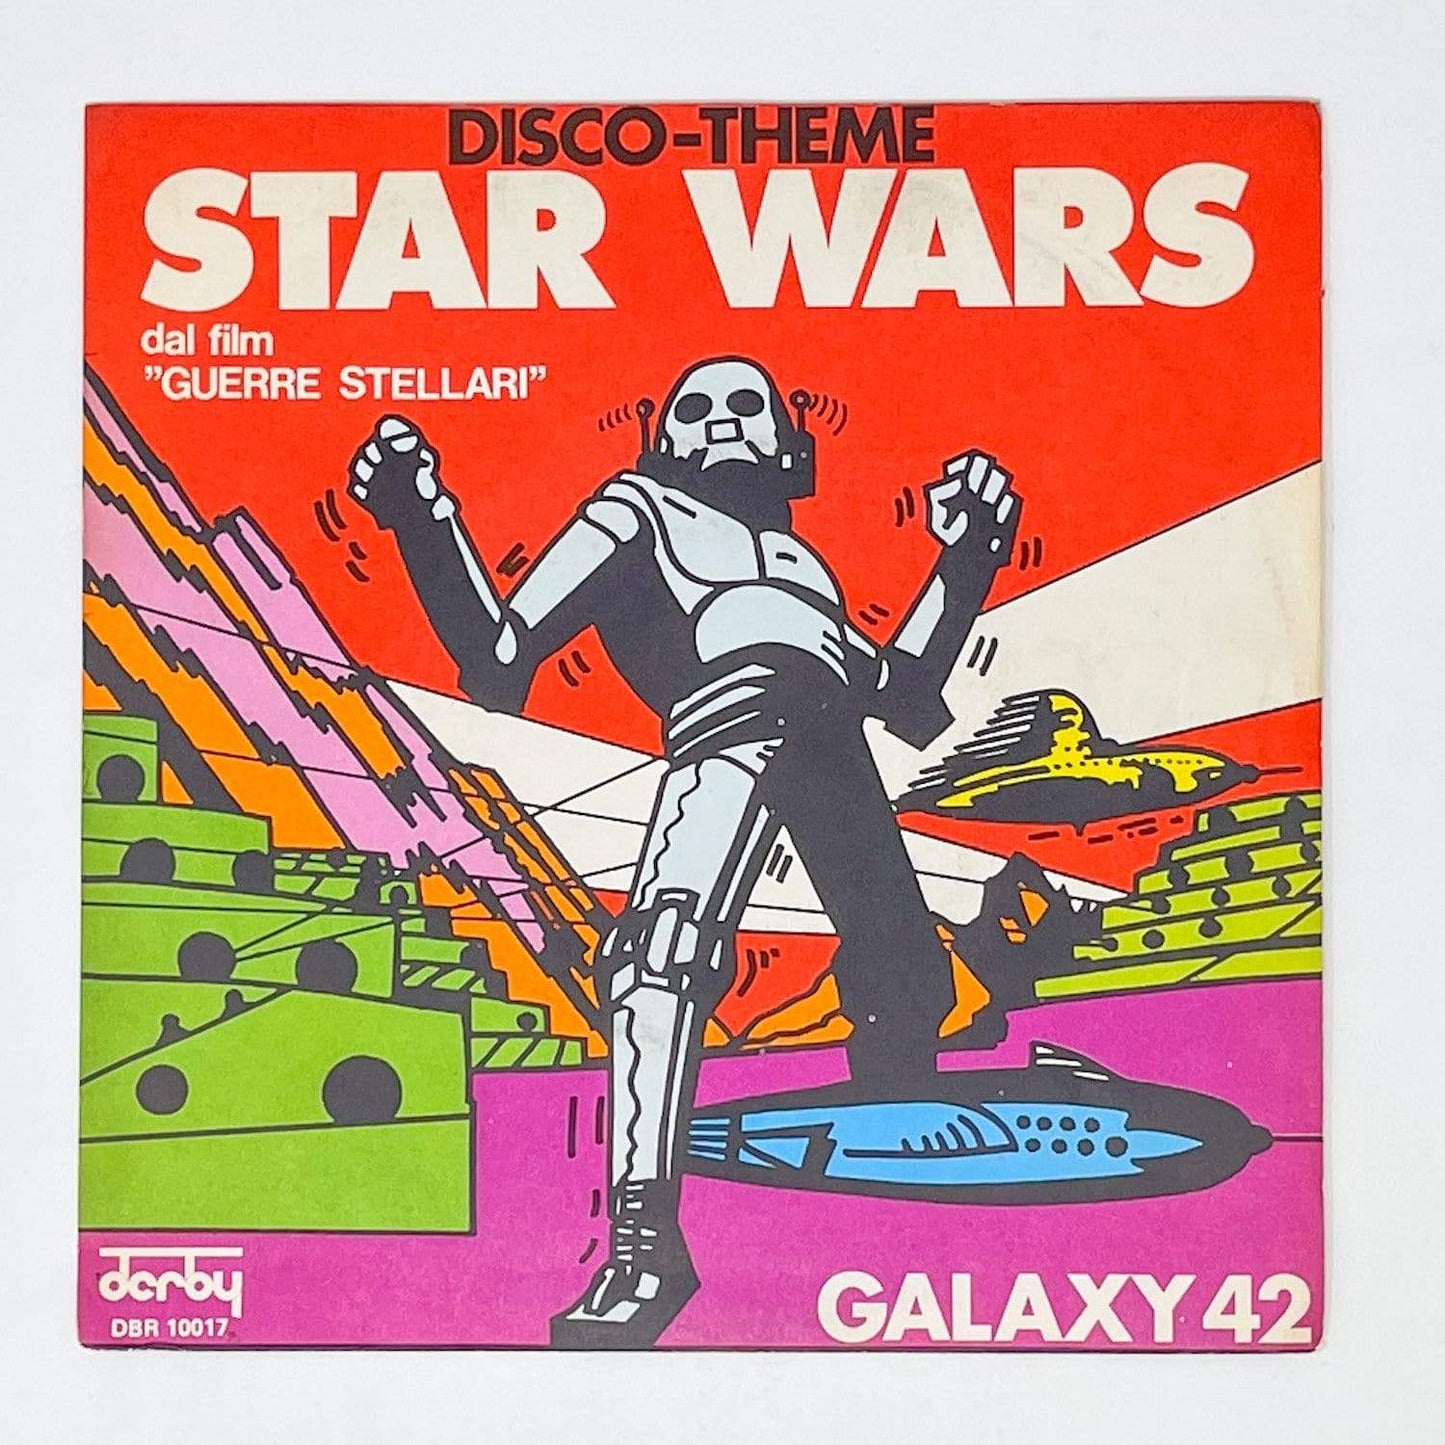 Vintage Zafiro Star Wars Non-Toy Star Wars Disco Theme 7" Record - Galaxy 42 - Italy (1977)